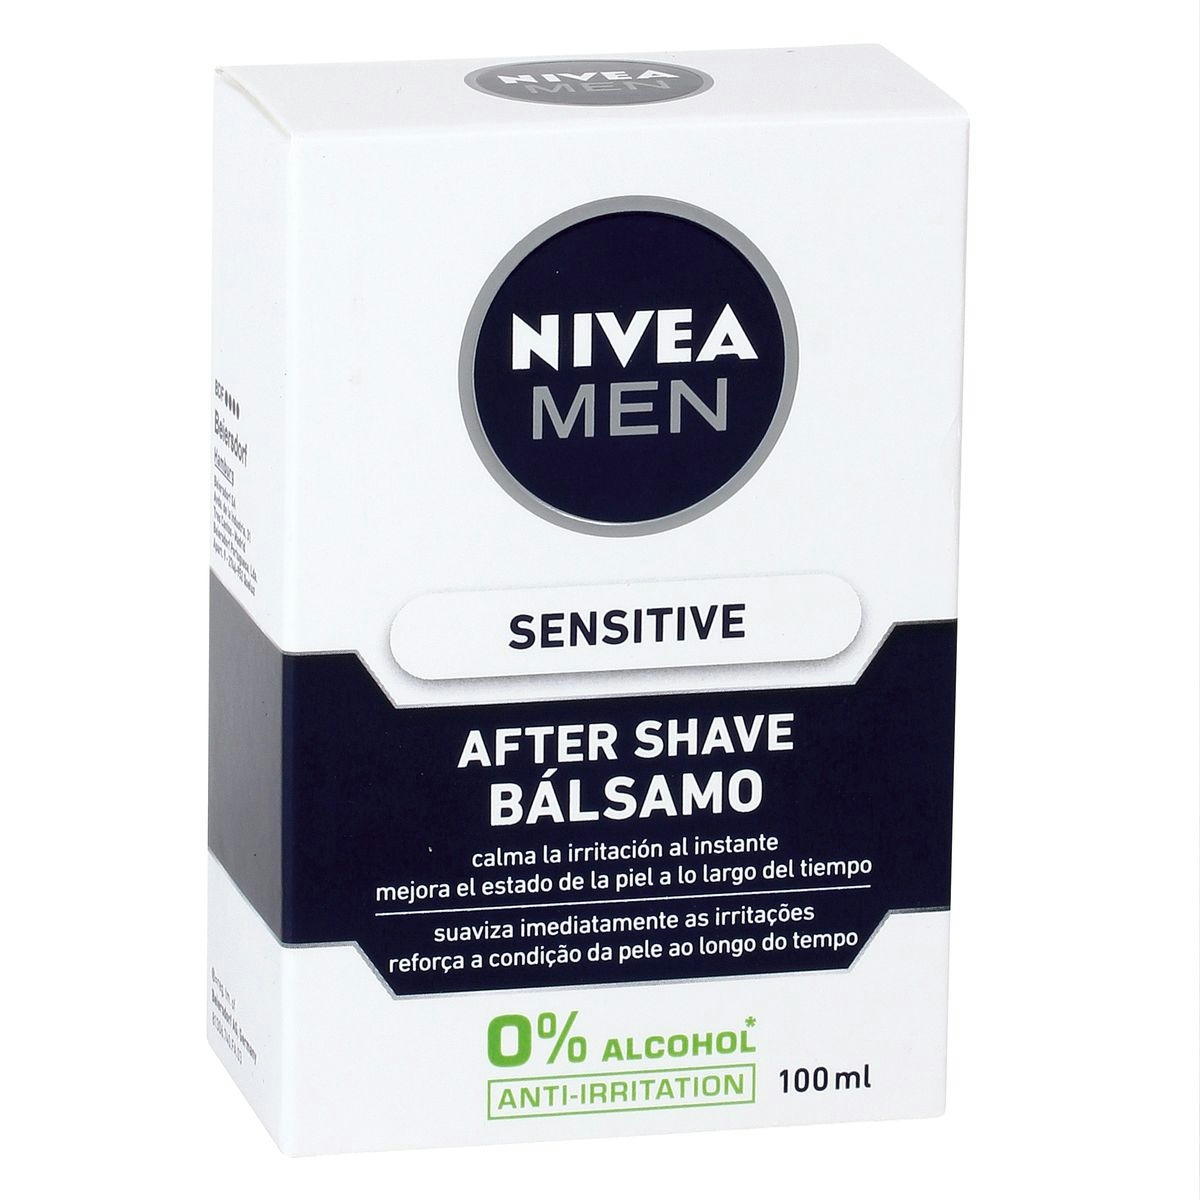 Bálsamo after shave sensitive NIVEA Men 100 ml